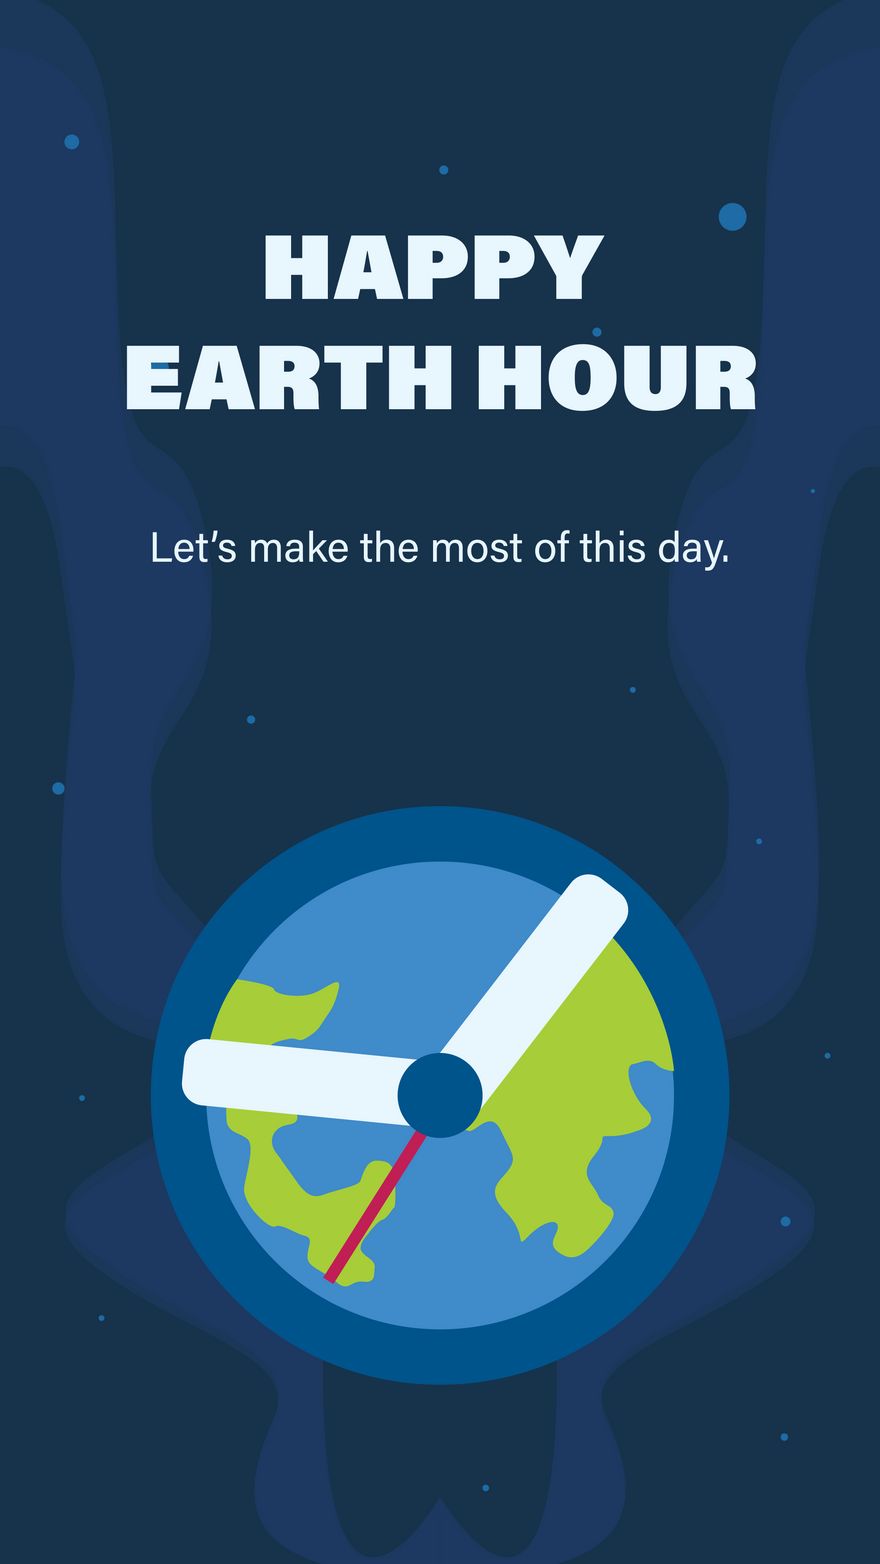 Free Earth Hour Instagram Story in Illustrator, PSD, EPS, SVG, JPG, PNG